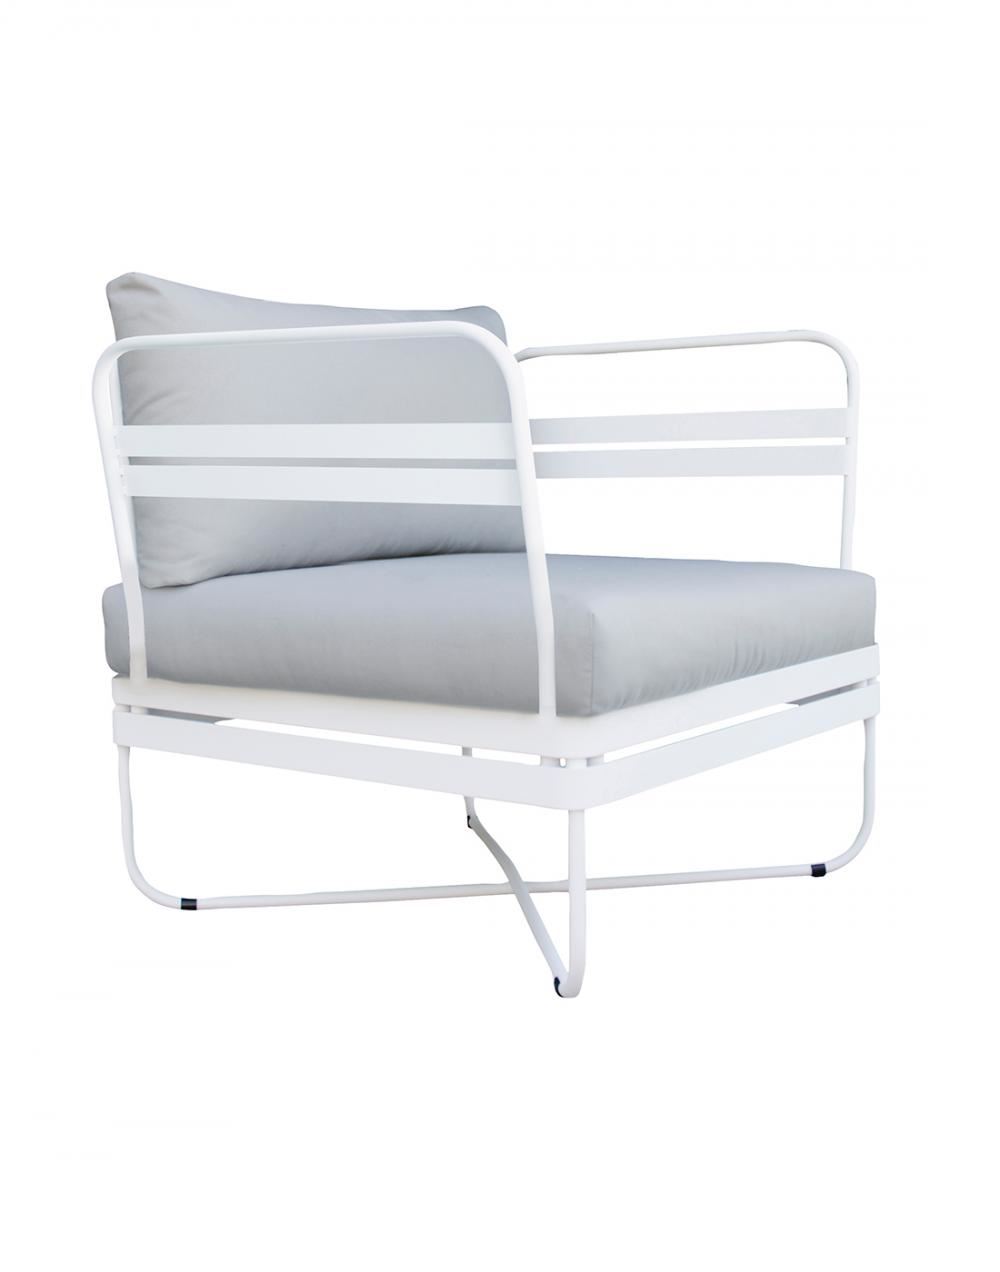 Bris Outdoor Chair White Outdoor Chair Light Grey